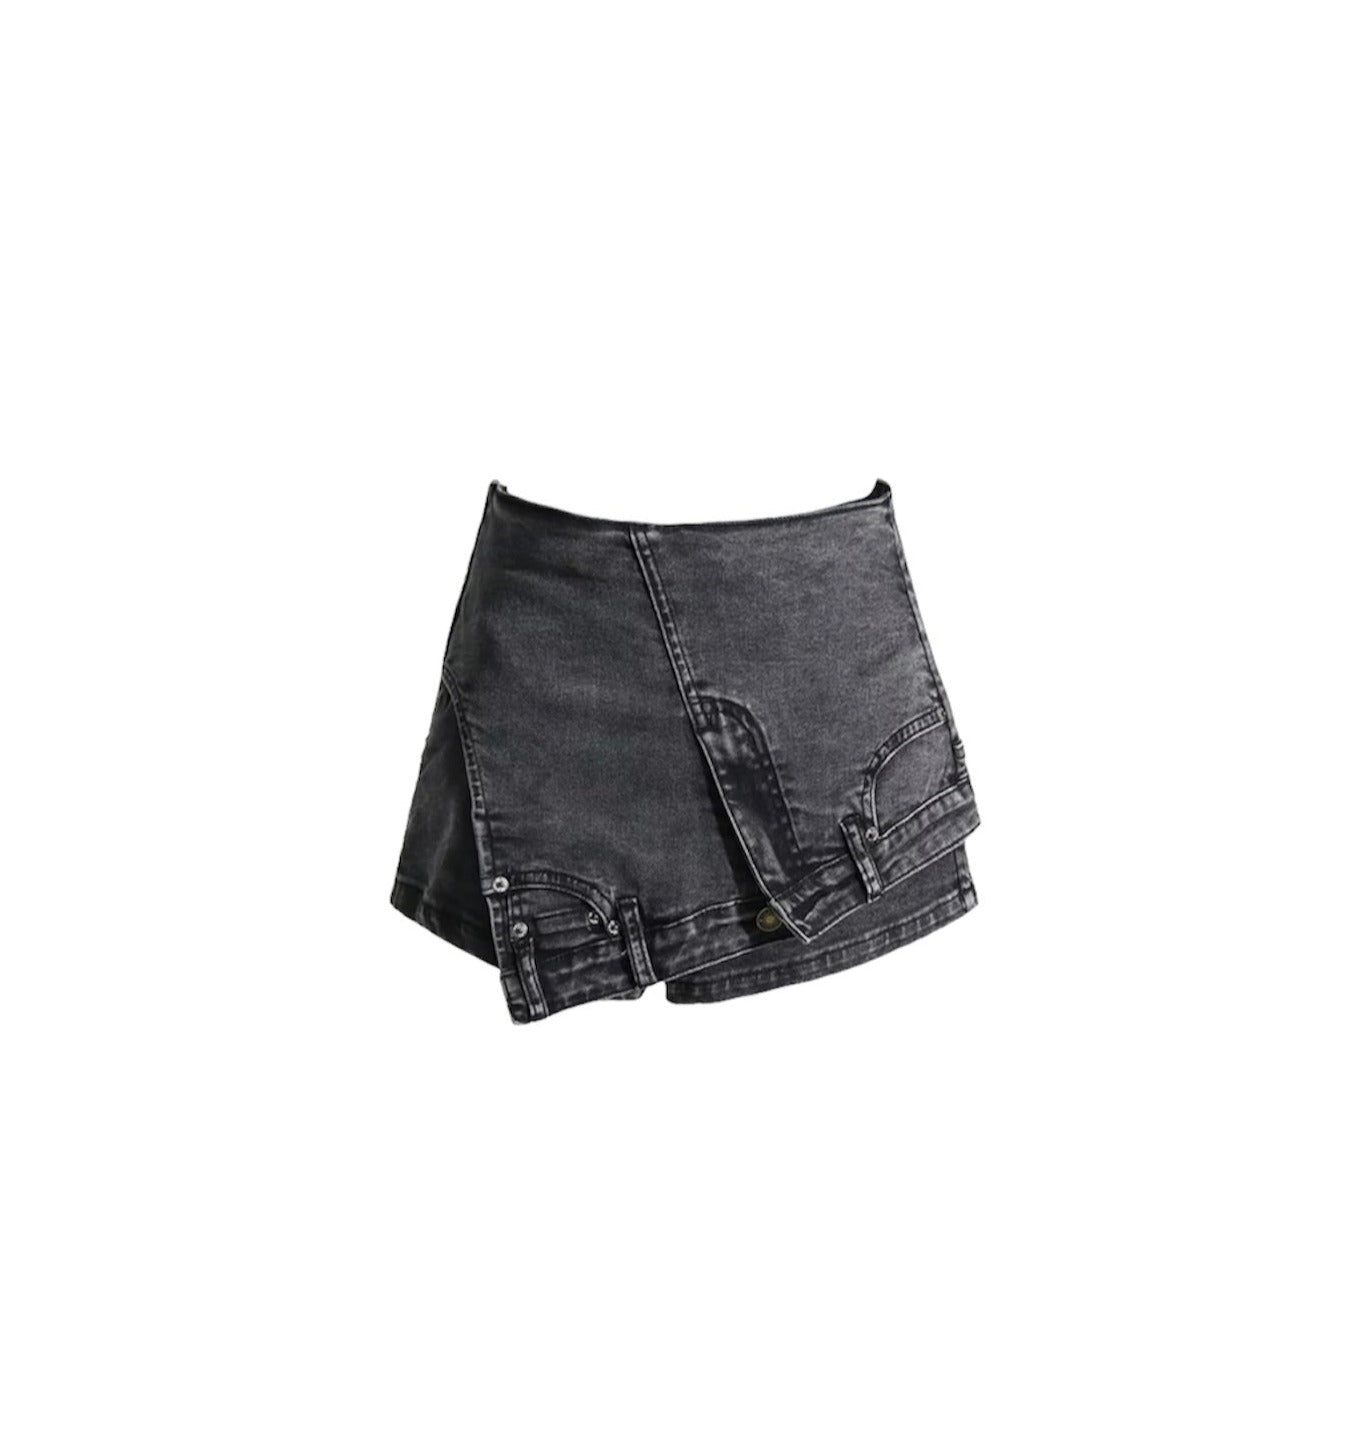 Black Denim Jeans Pants Skort - Dezired Beauty Boutique